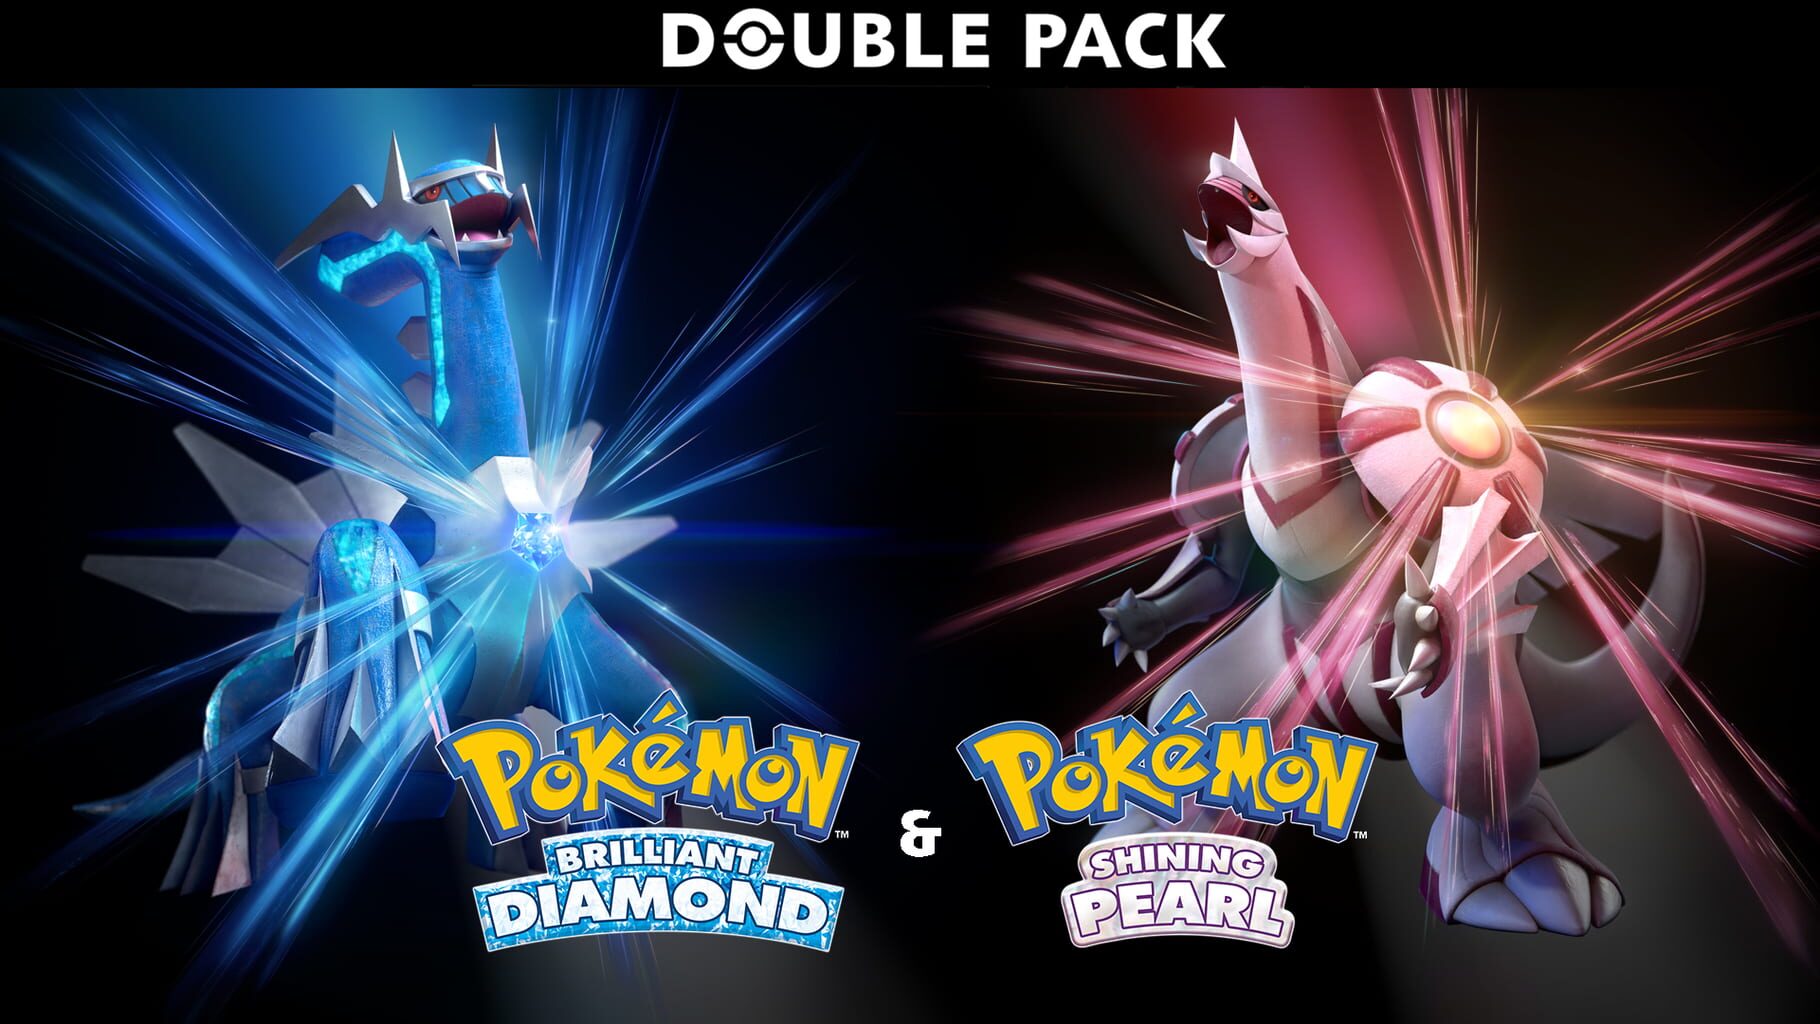 Pokémon Brilliant Diamond and Pokémon Shining Pearl Double Pack artwork